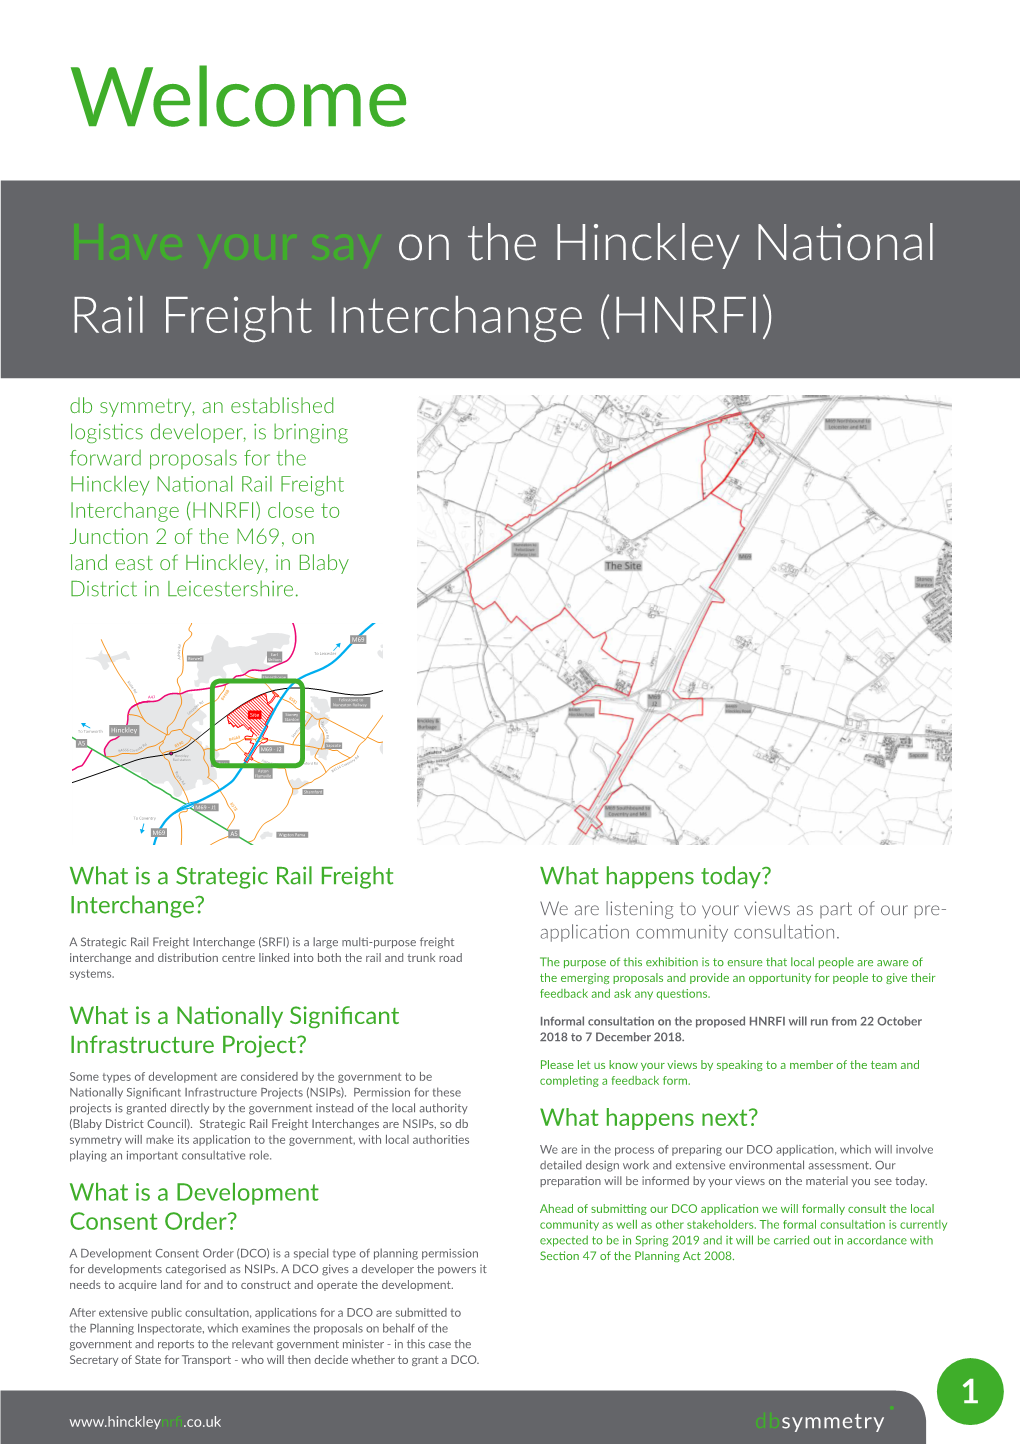 What Is a Strategic Rail Freight Interchange?